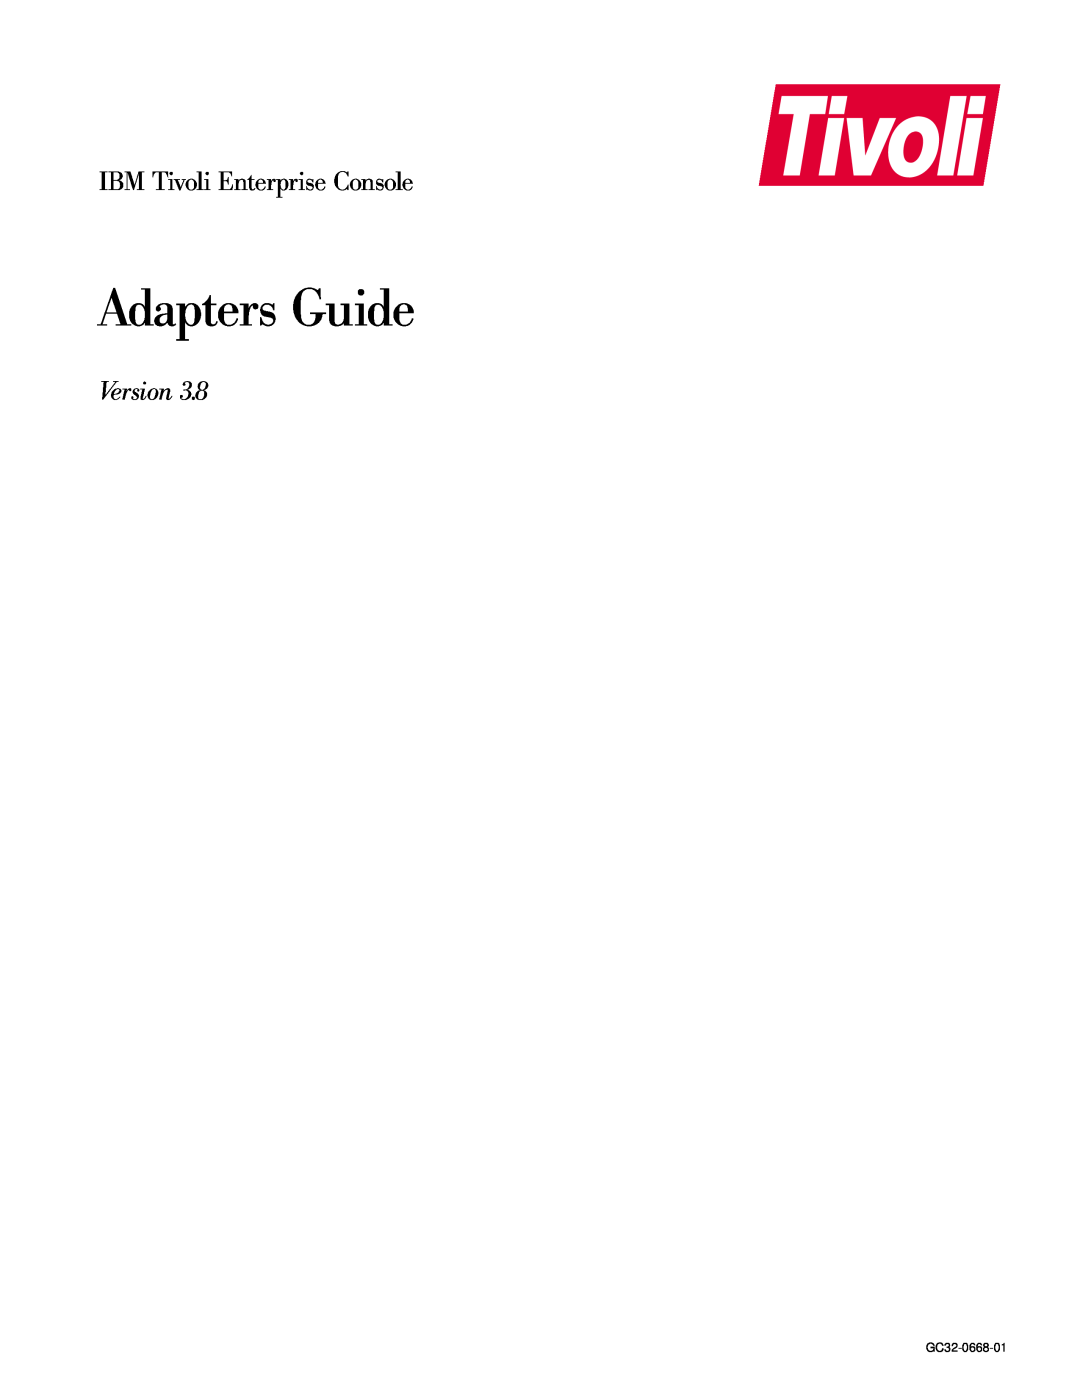 IBM manual Adapters Guide, IBM Tivoli Enterprise Console, Version, GC32-0668-01 